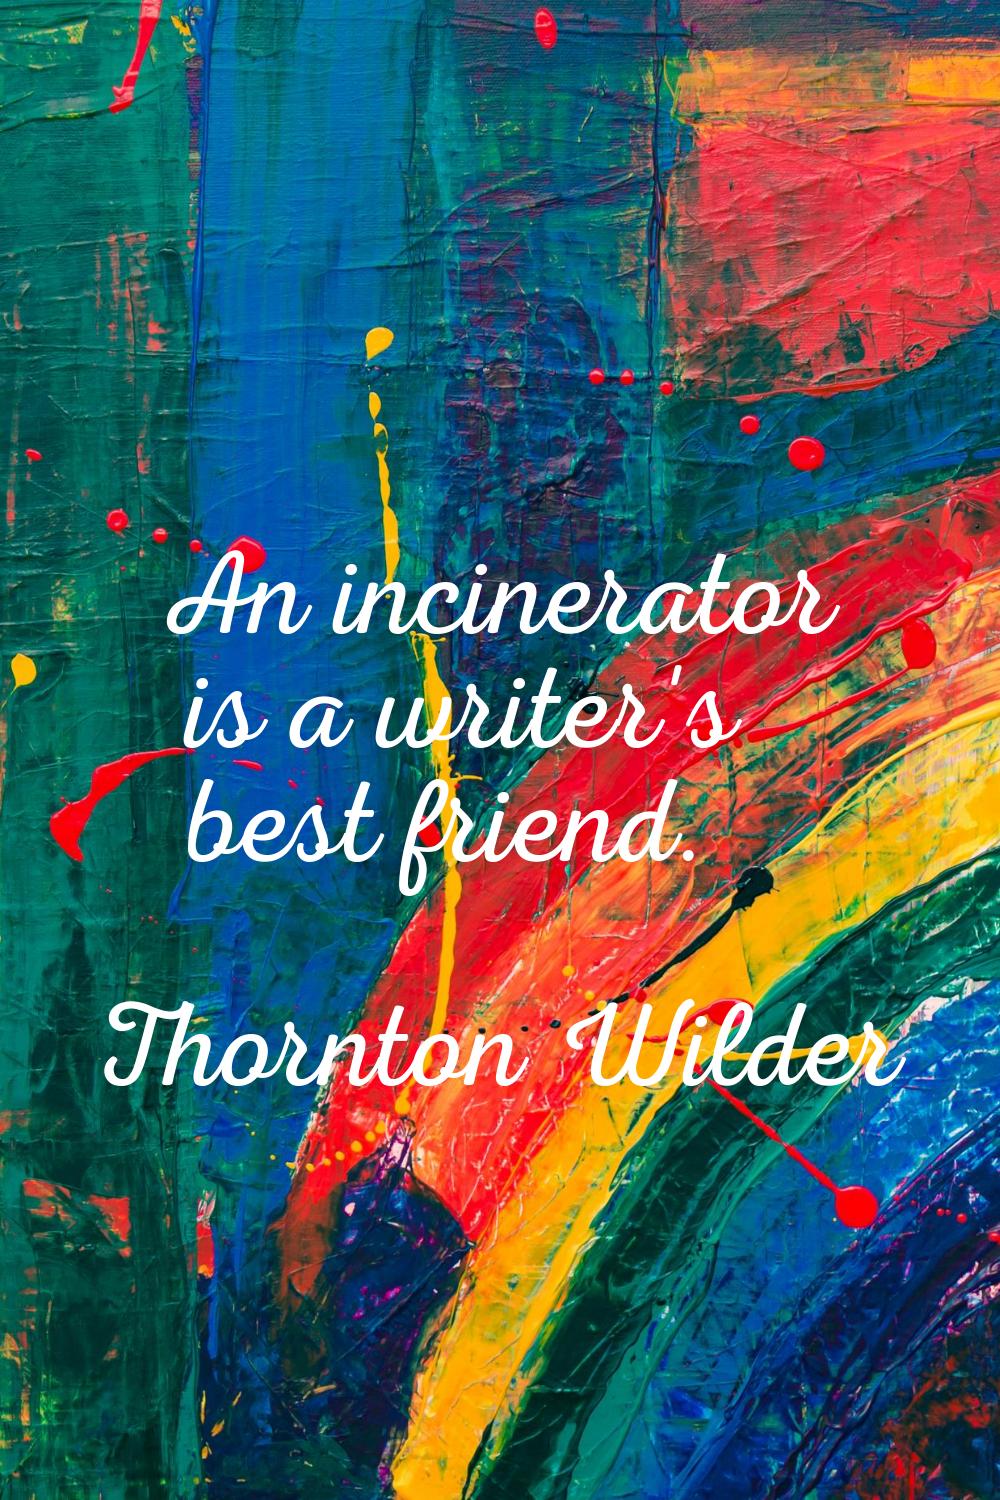 An incinerator is a writer's best friend.